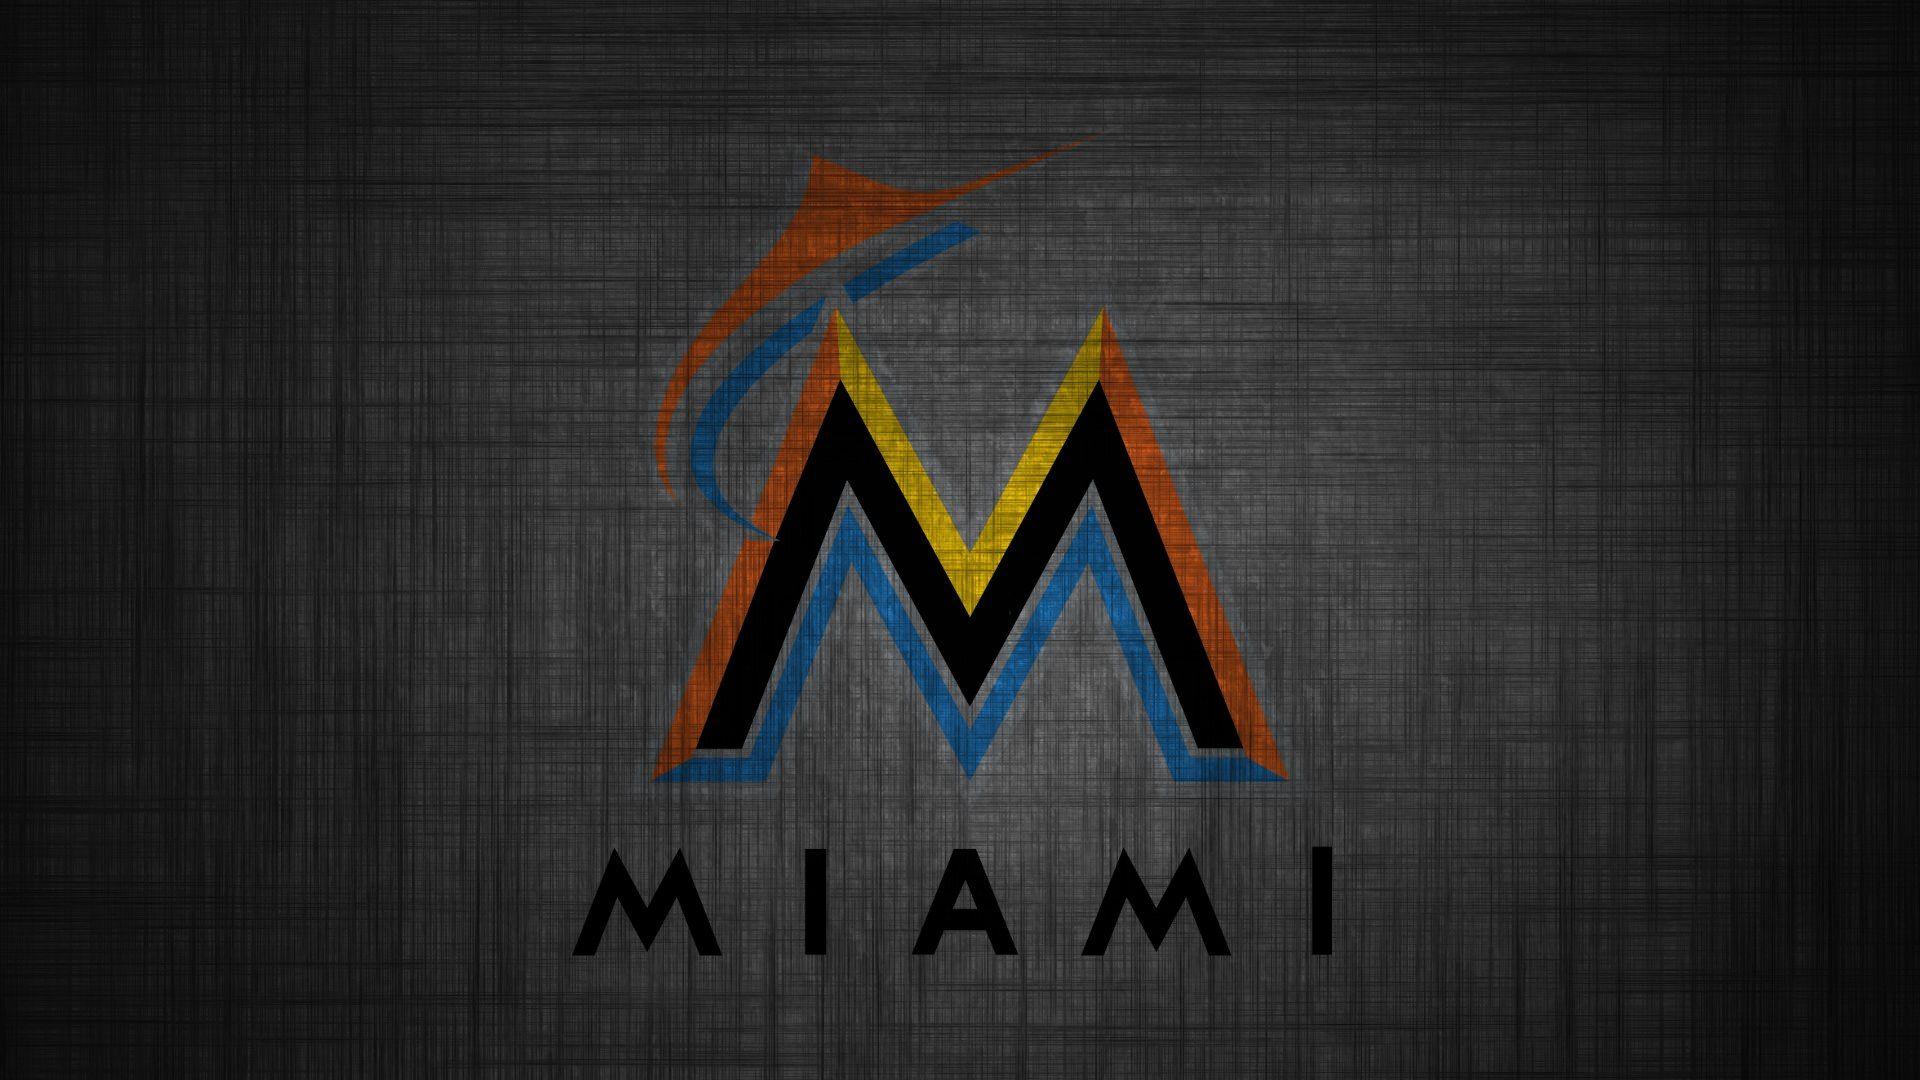 Miami Marlins Wallpapers